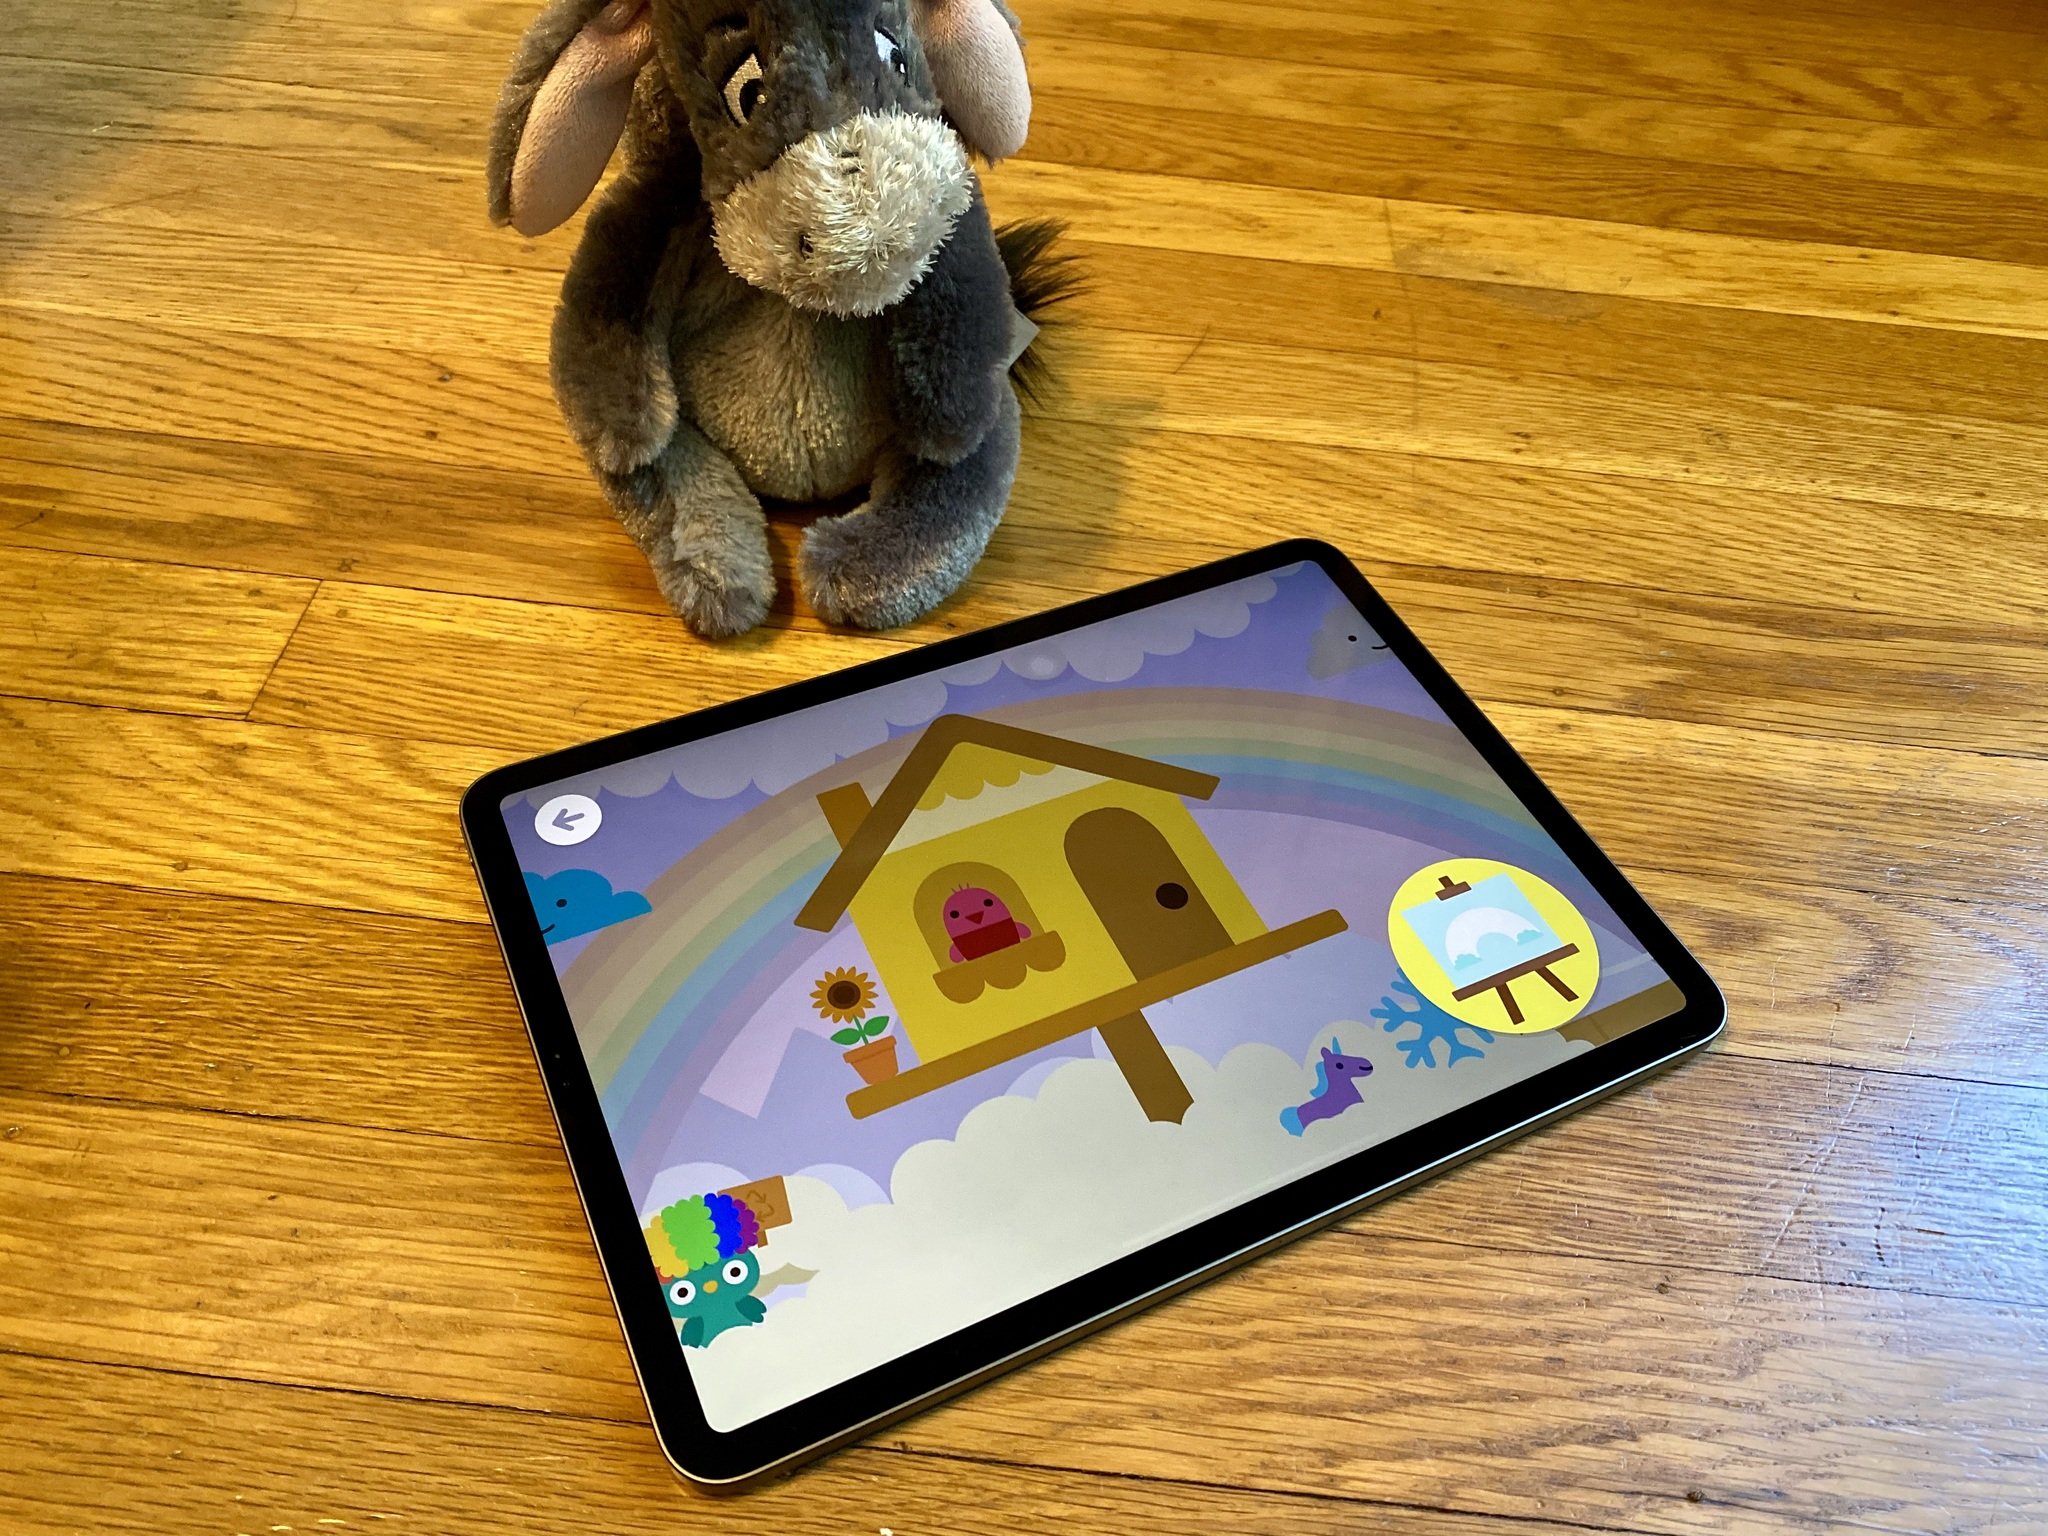 Sago Mini School on iPad Pro with Eeyore in the background